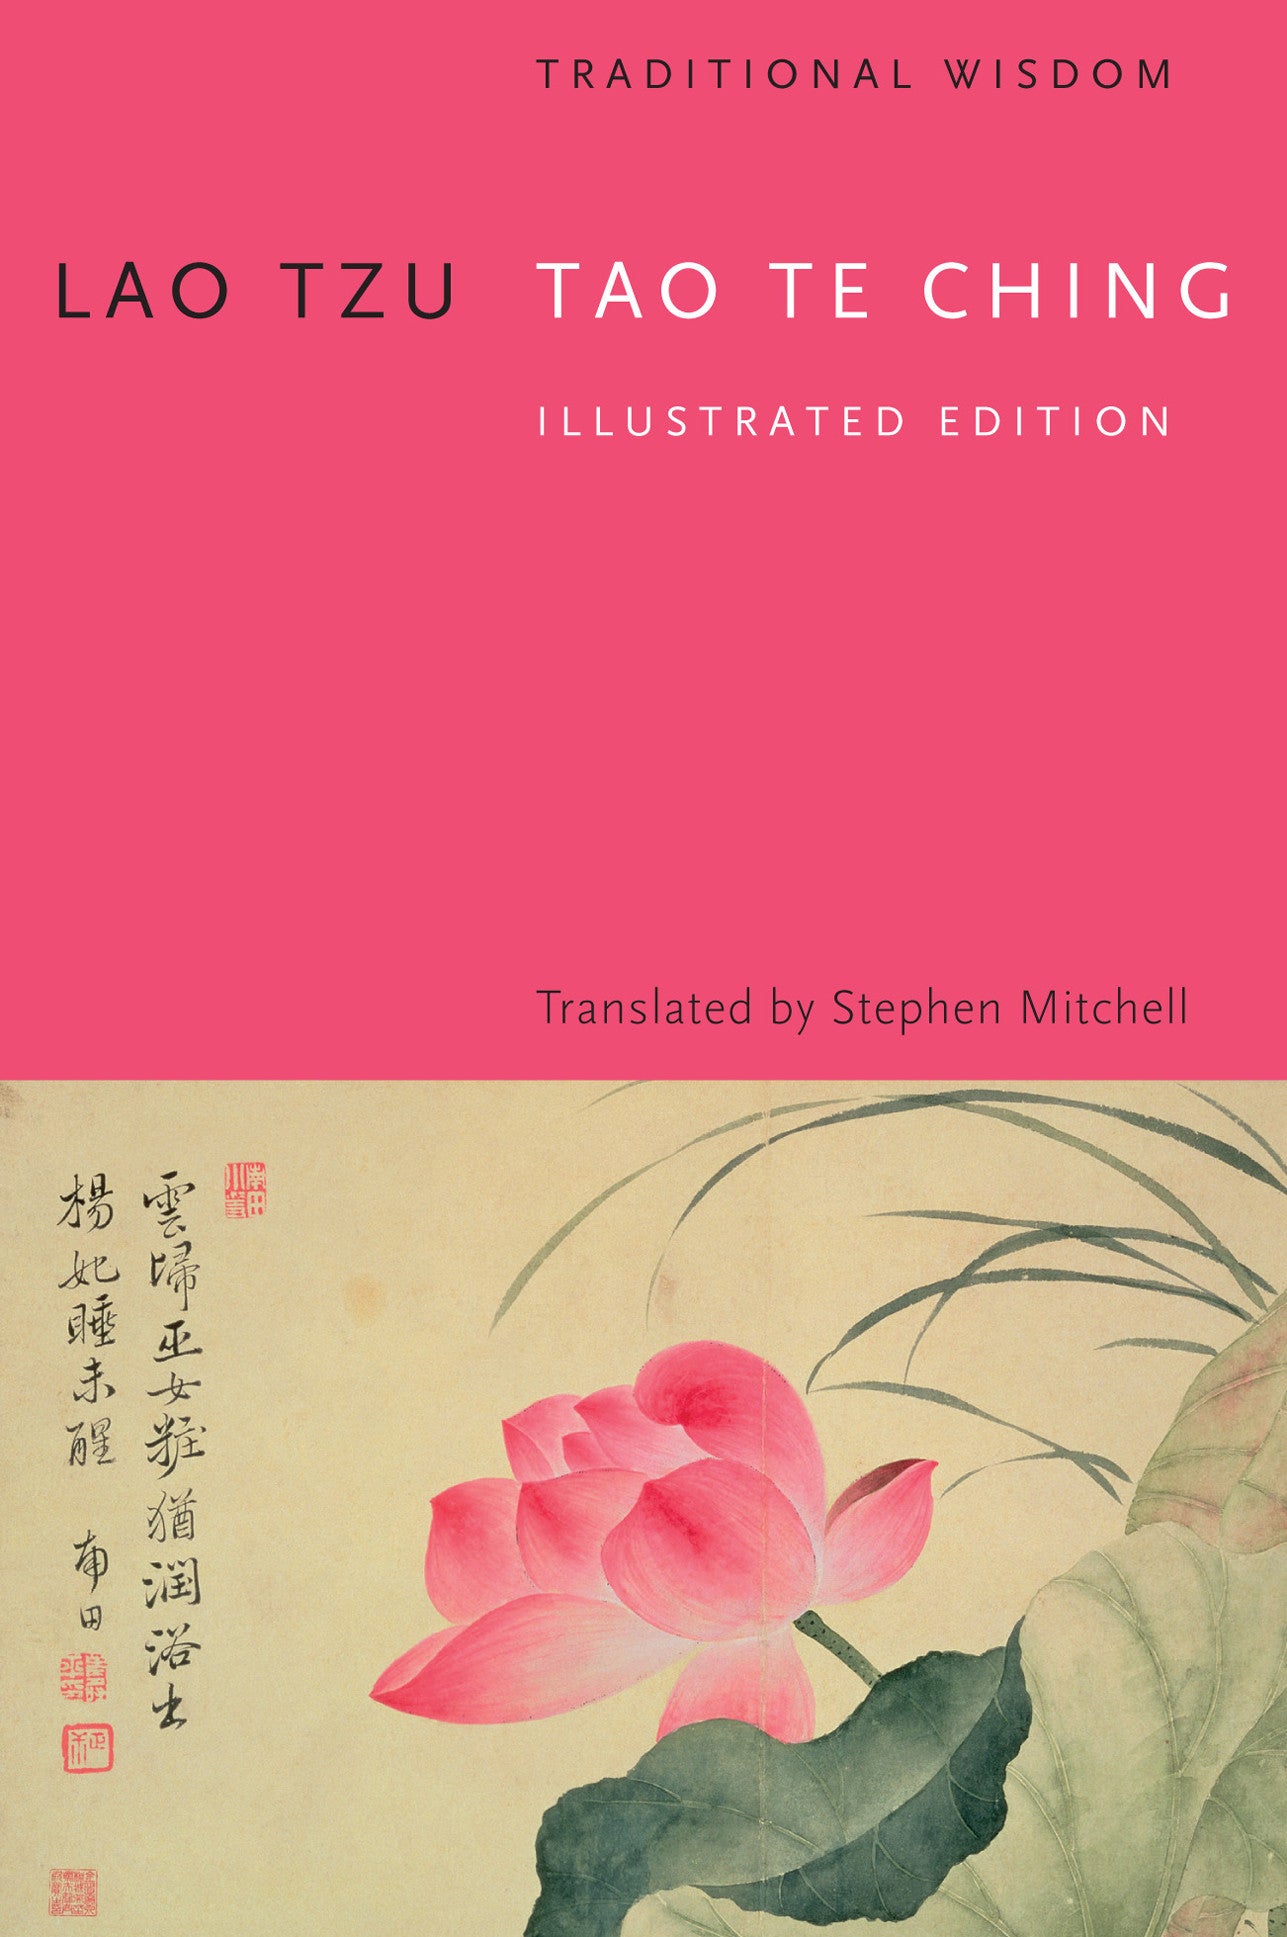 TAO TE CHING Lao Tzu | Cygnus Book Club